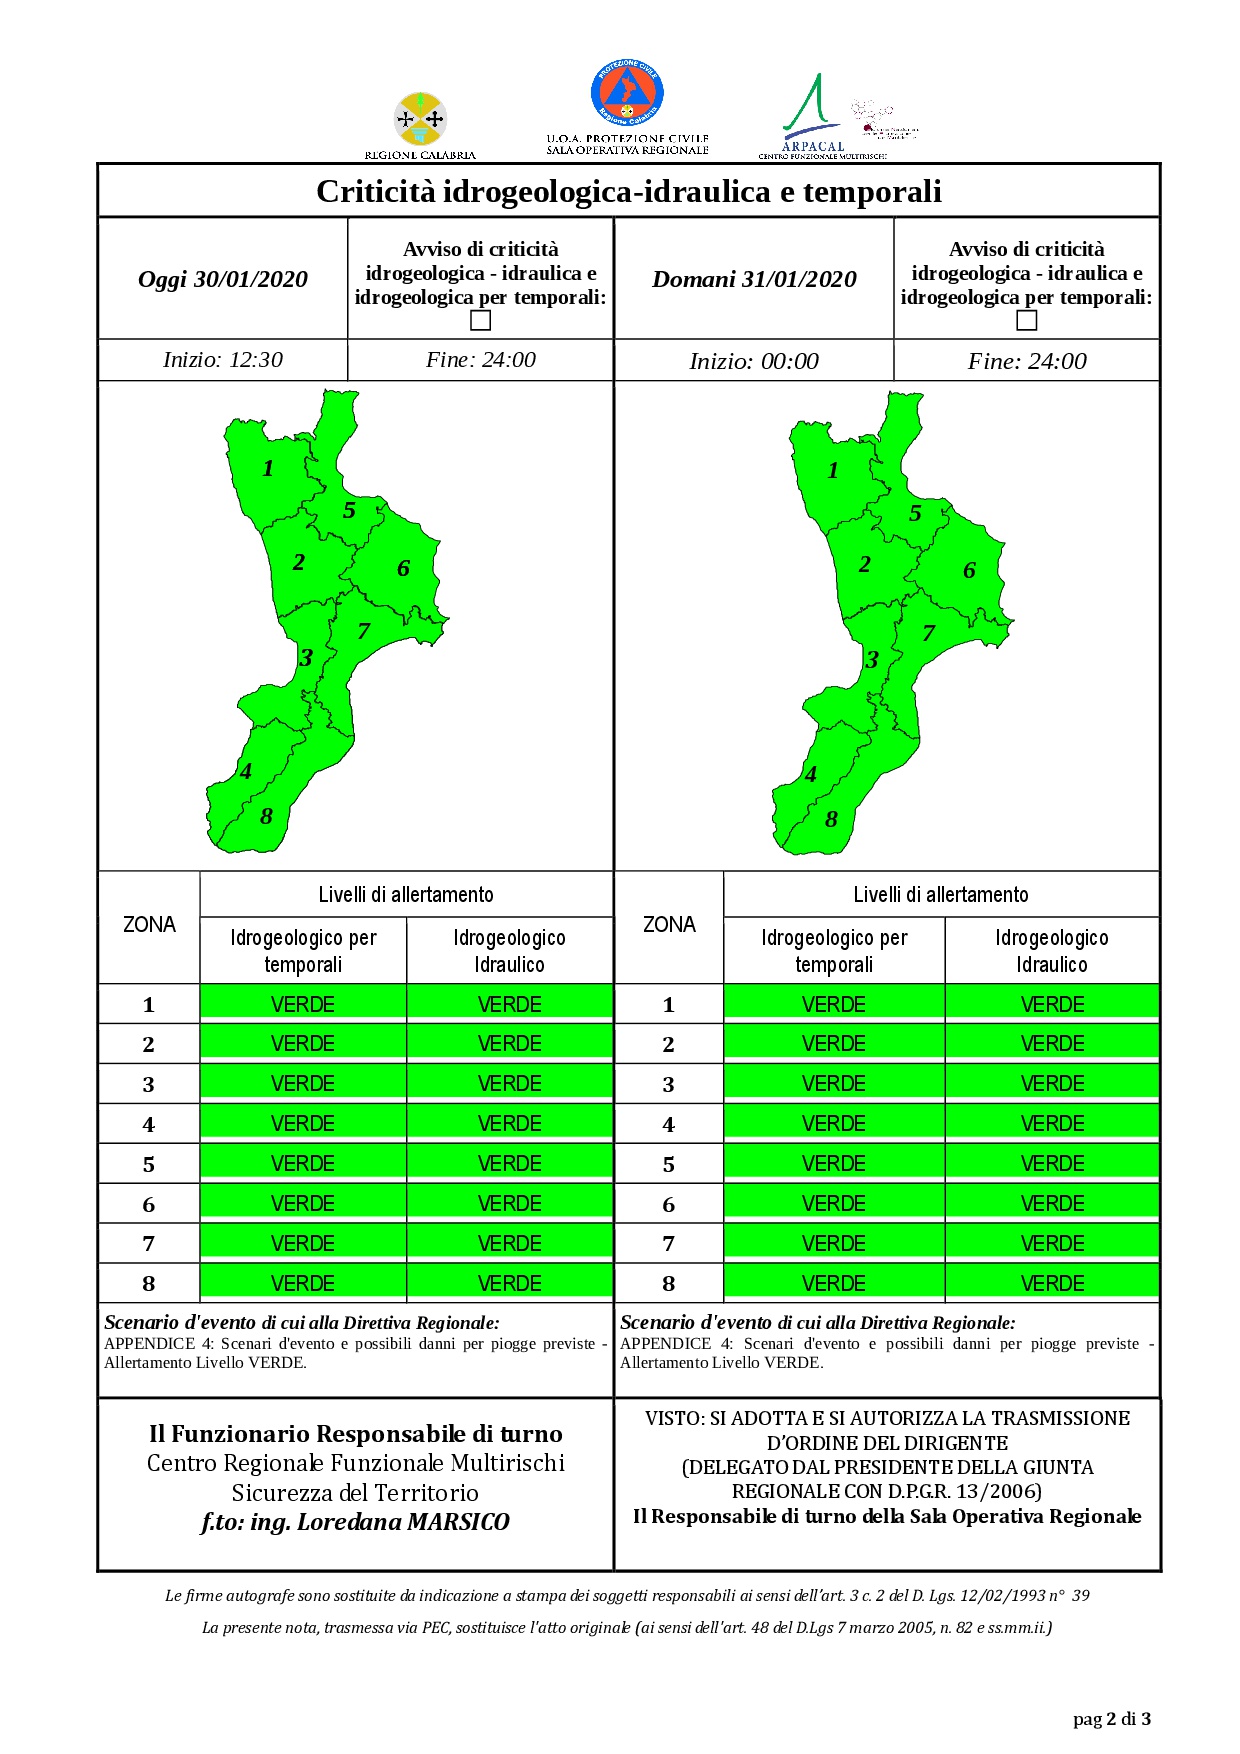 Criticità idrogeologica-idraulica e temporali in Calabria 30-01-2020